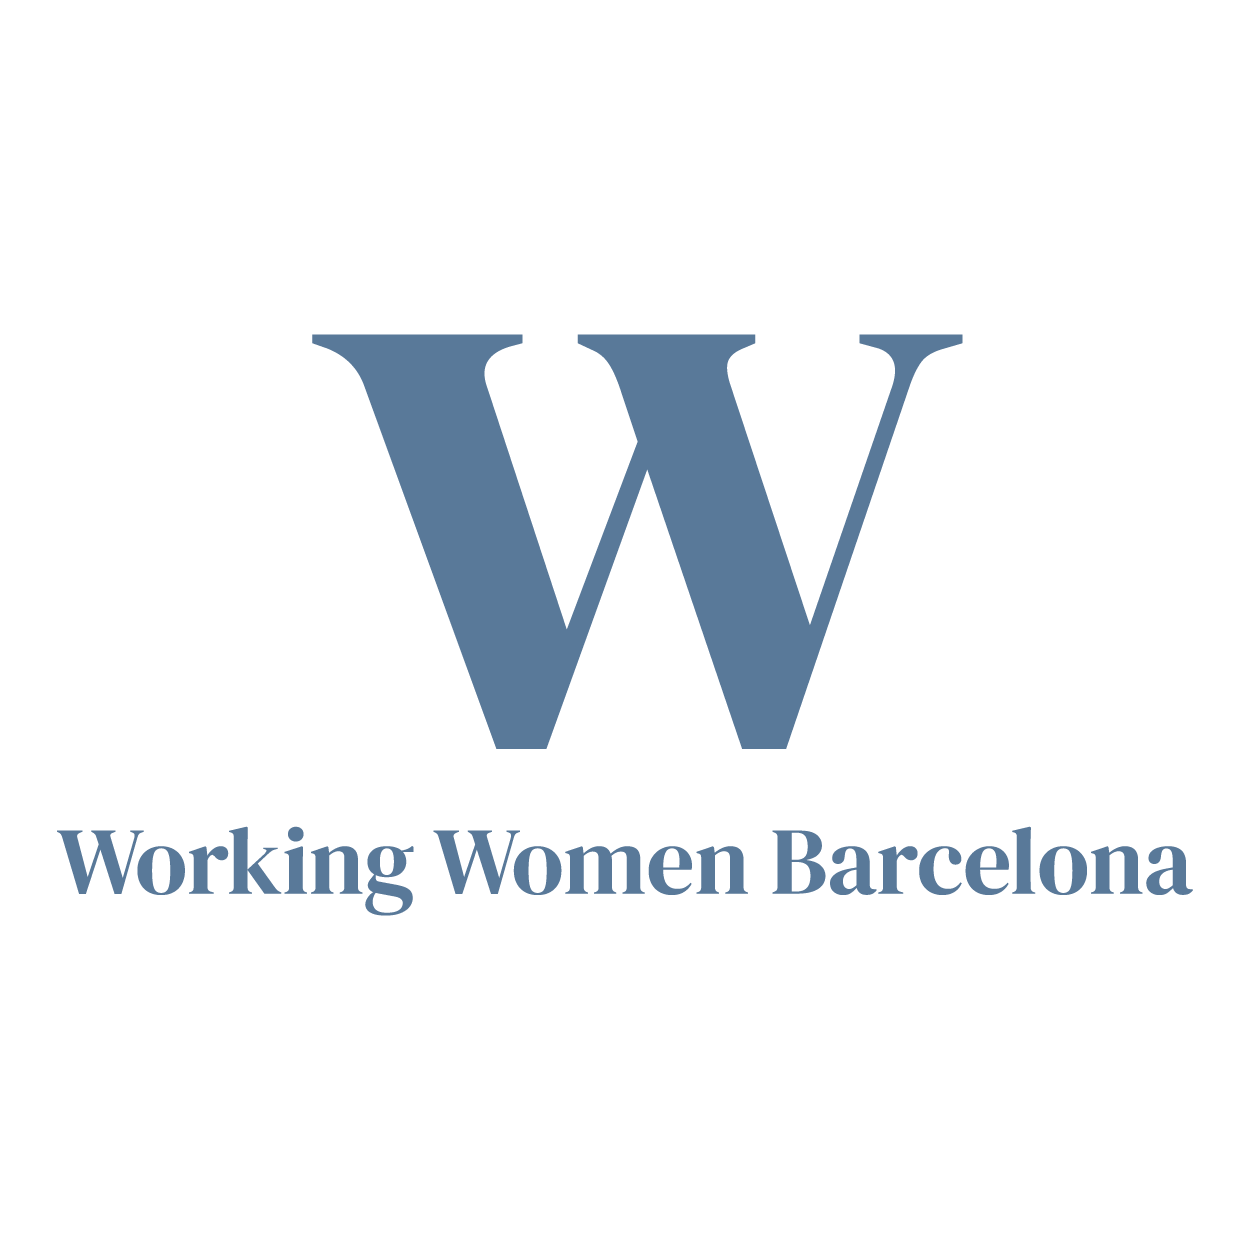 Working Women Barcelona